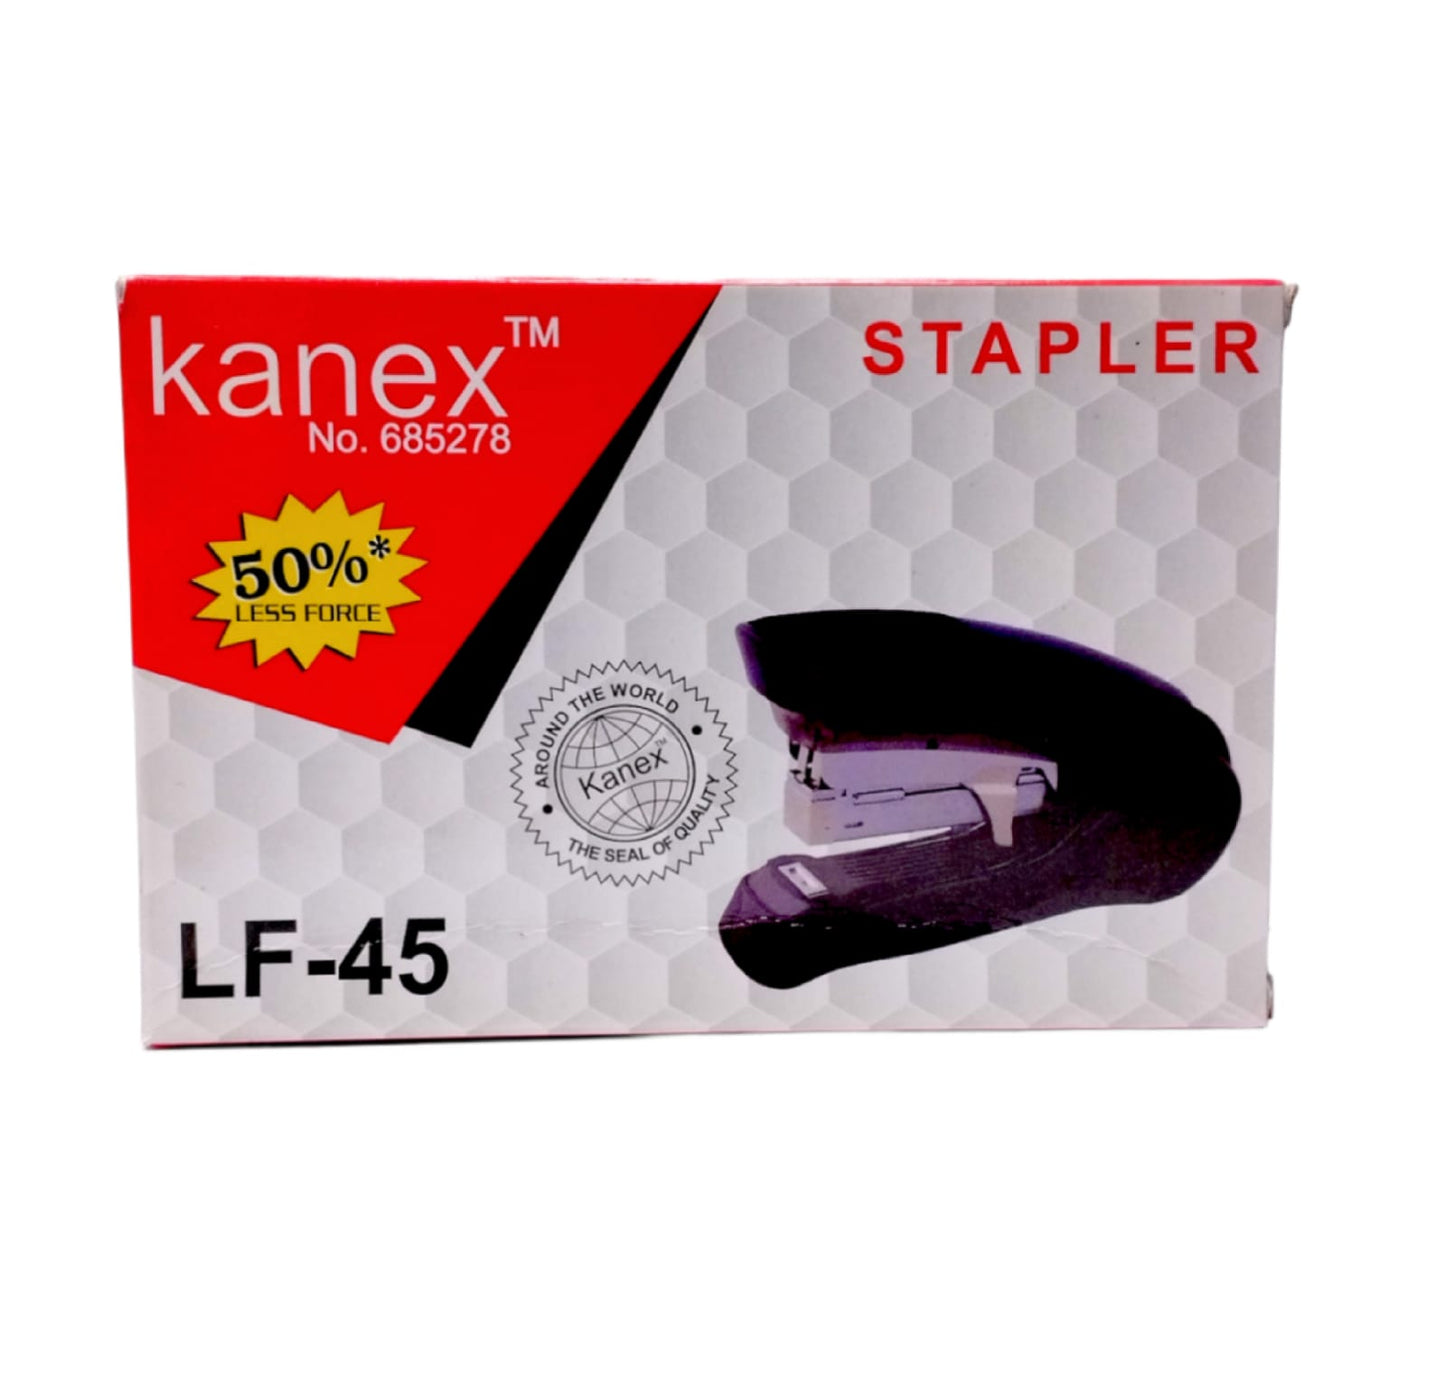 Kanex Stapler LF-45 || دباسة كانيكس ٤٥